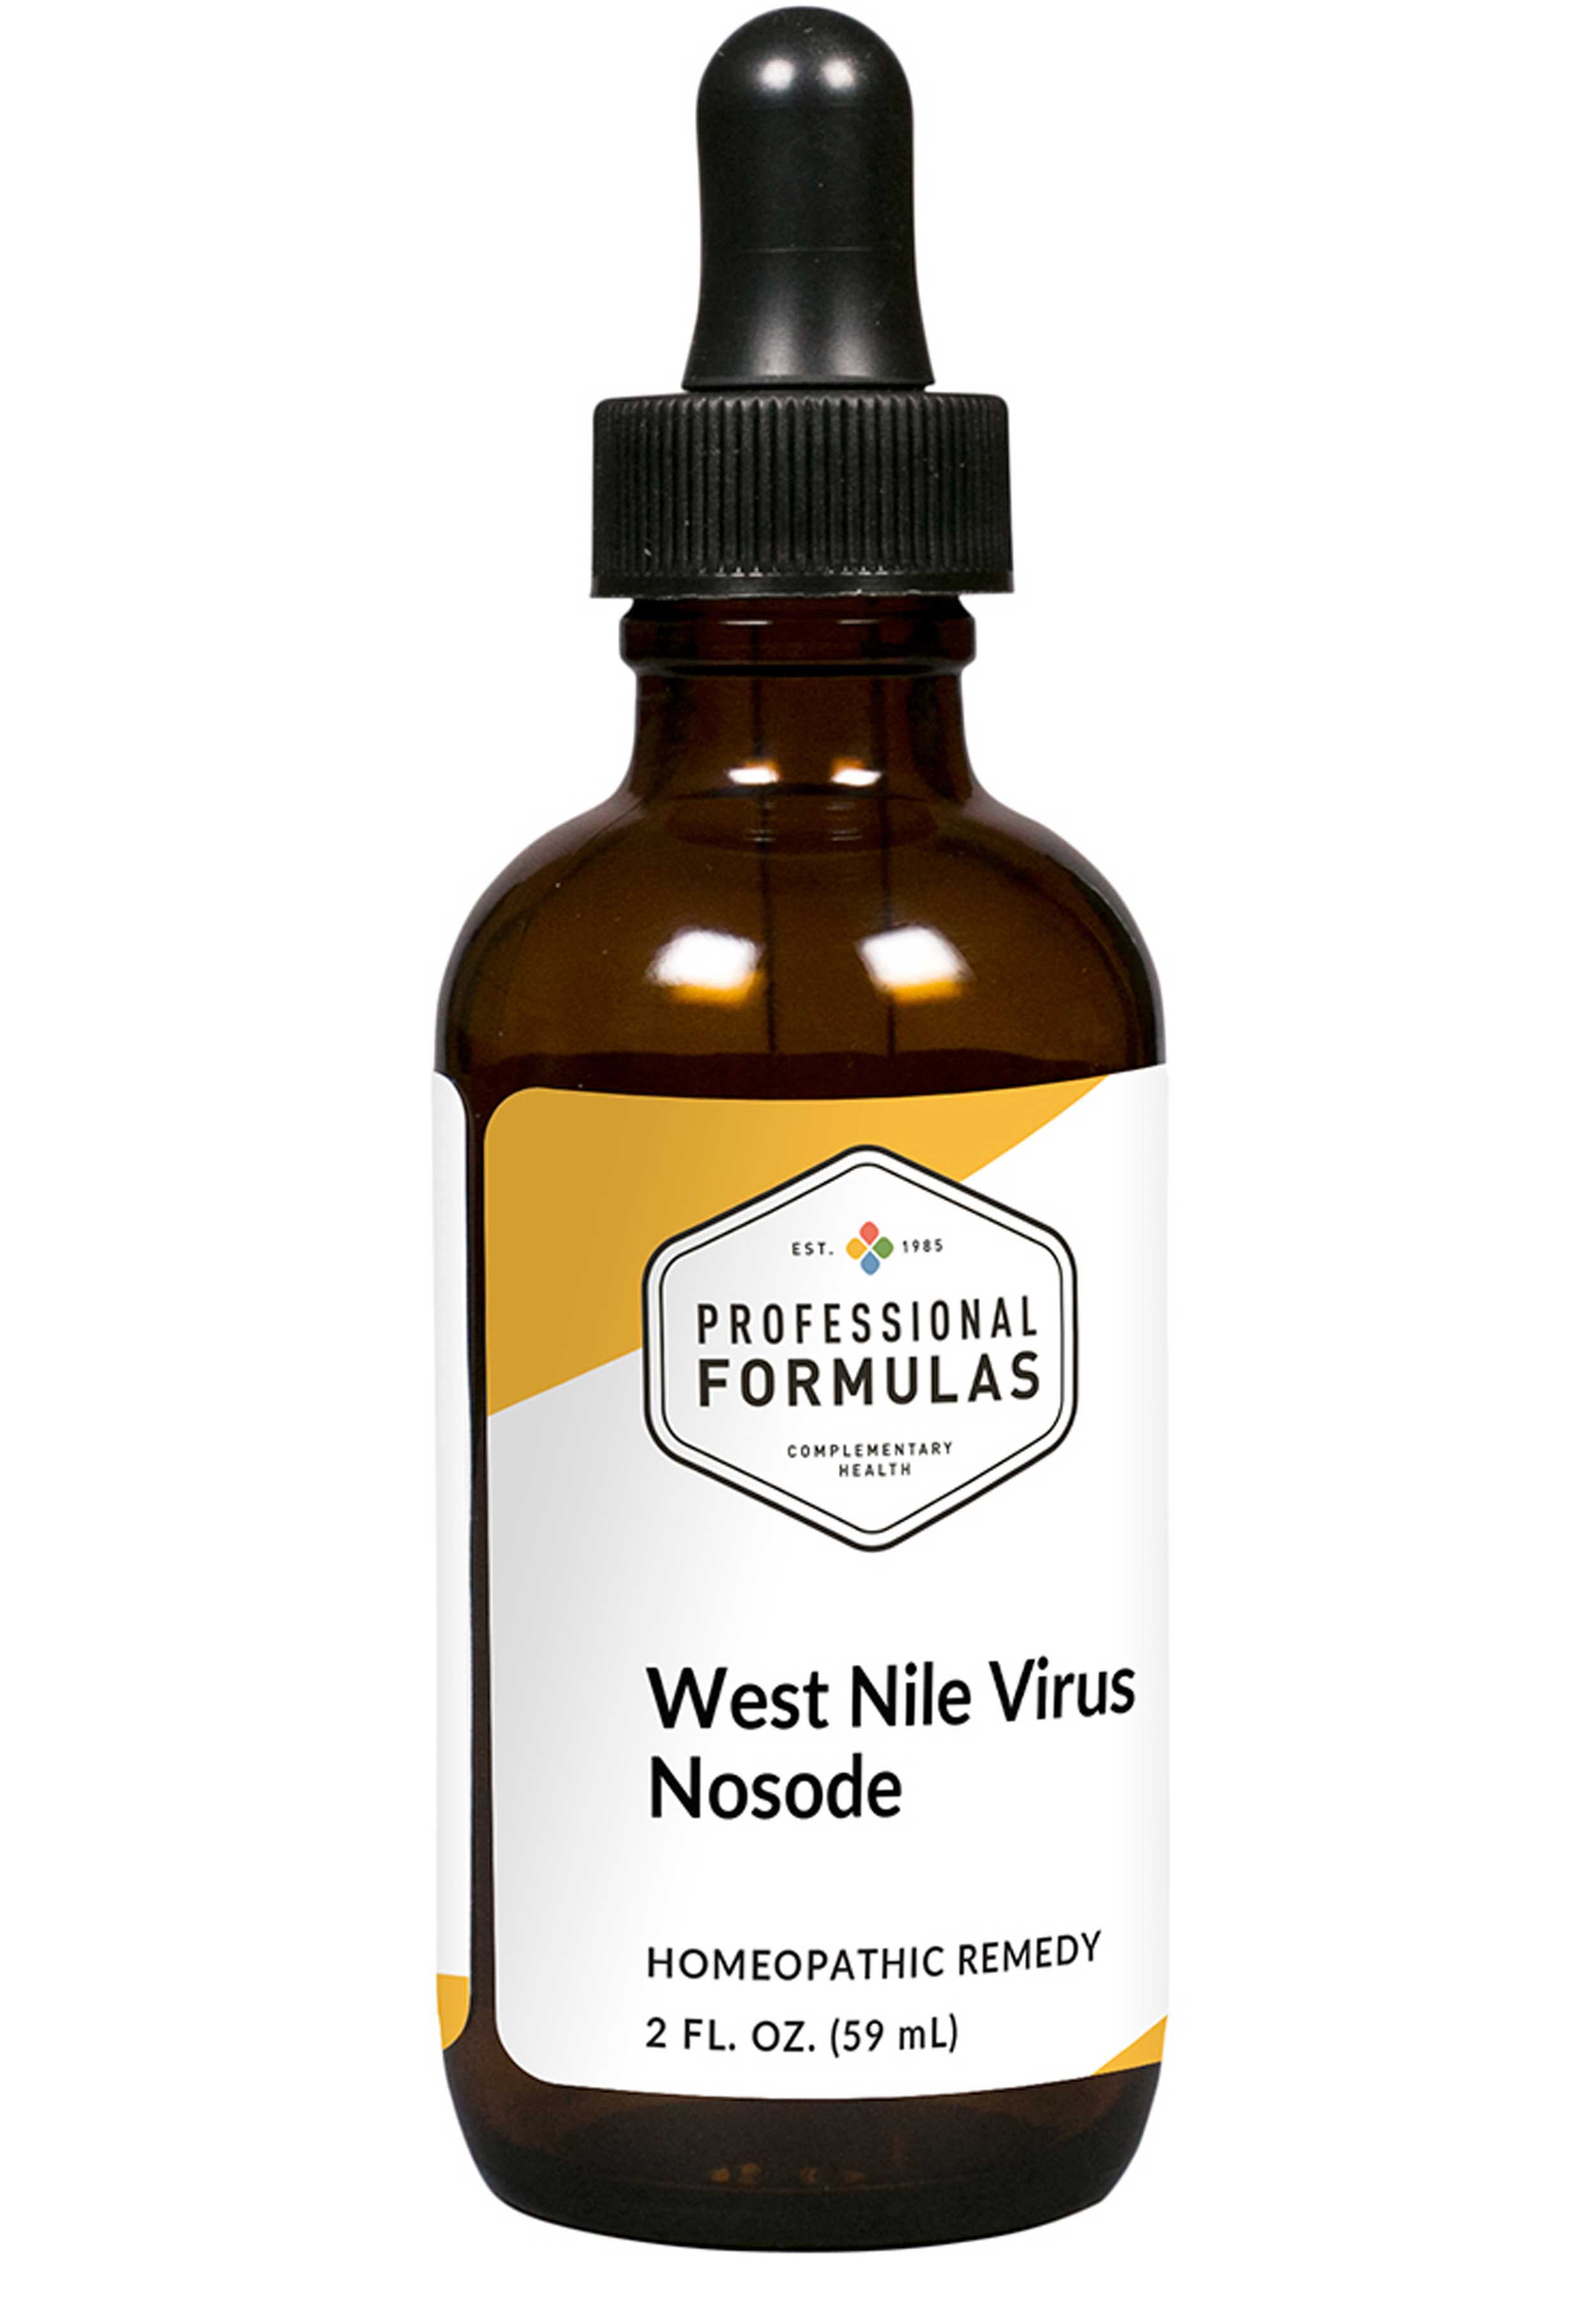 Professional Formulas West Nile Virus Nosode